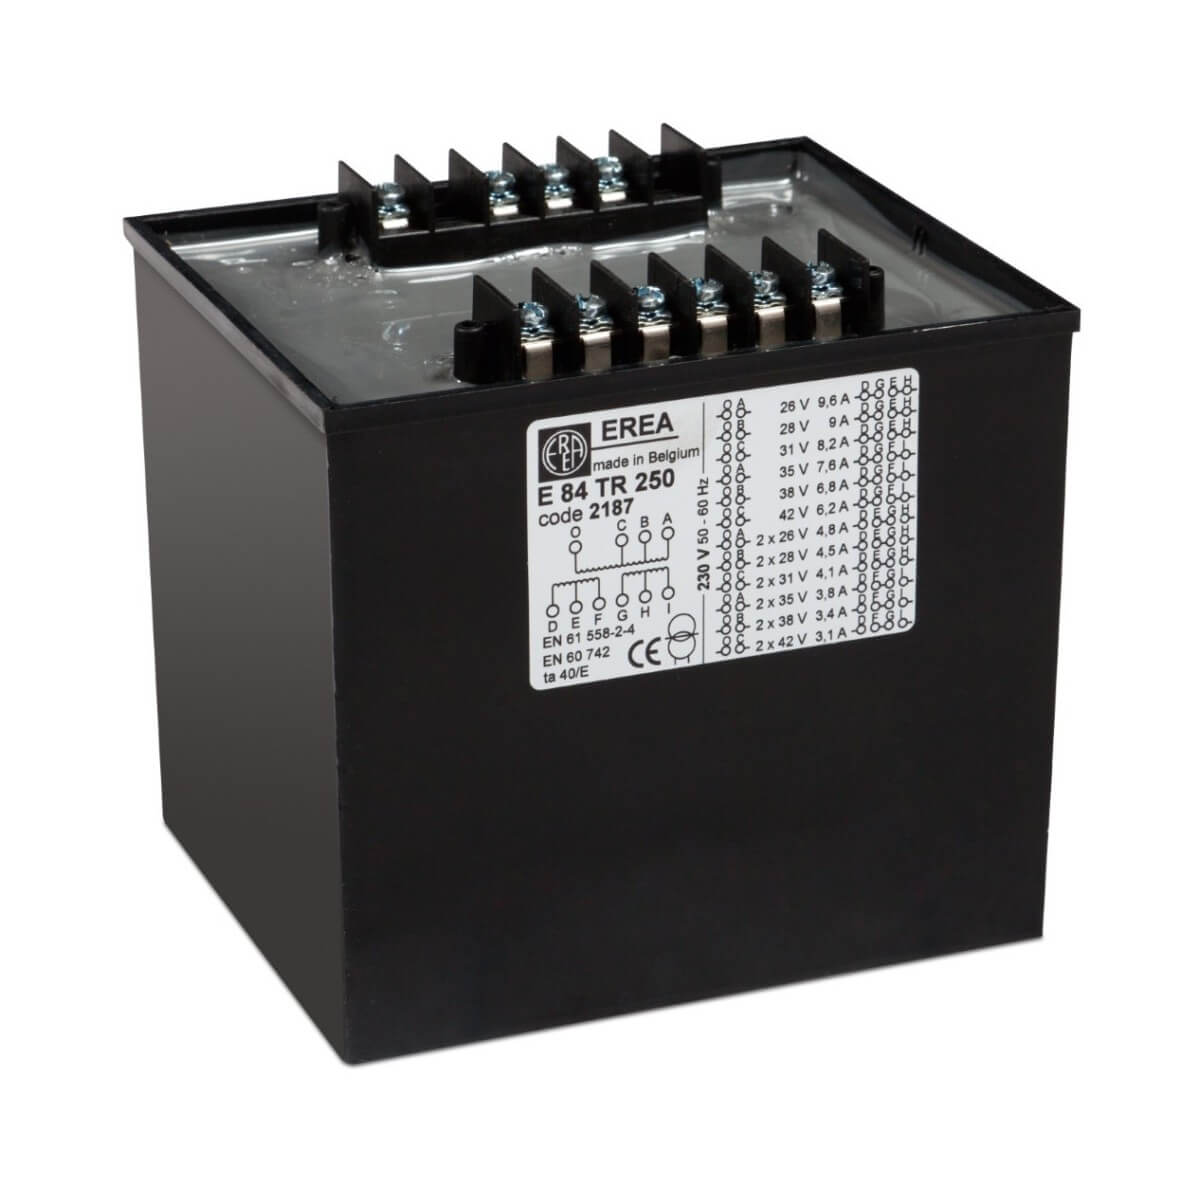 EREA 1 fase beschermingstransformator 230V/Us Multi-voltage 250VA E 84TR250